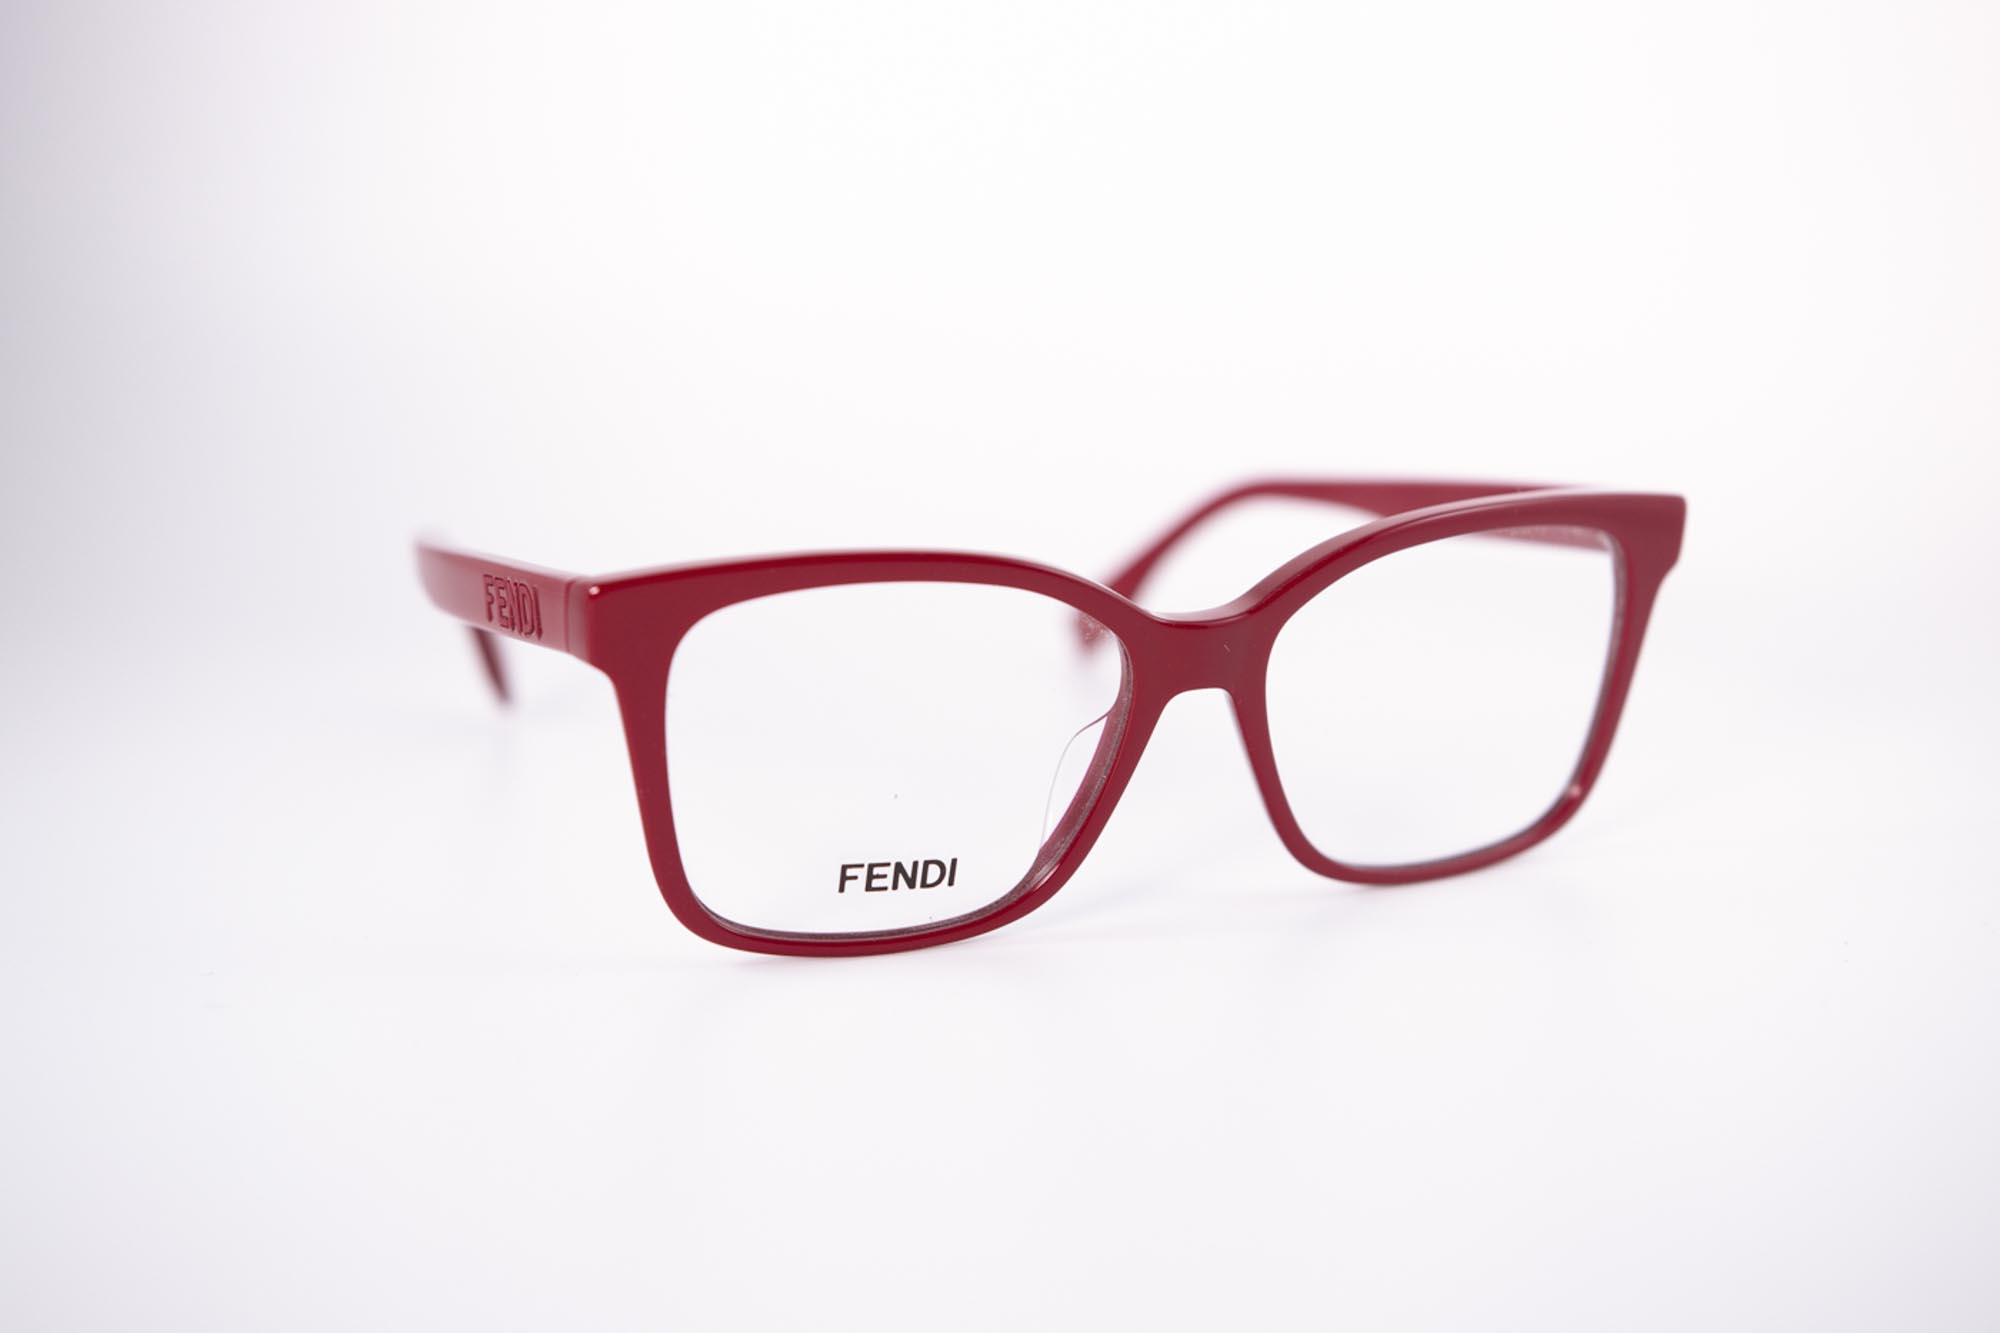 Damenbrille Fendi Rot Acetat Kunststoffbrille modische Brille